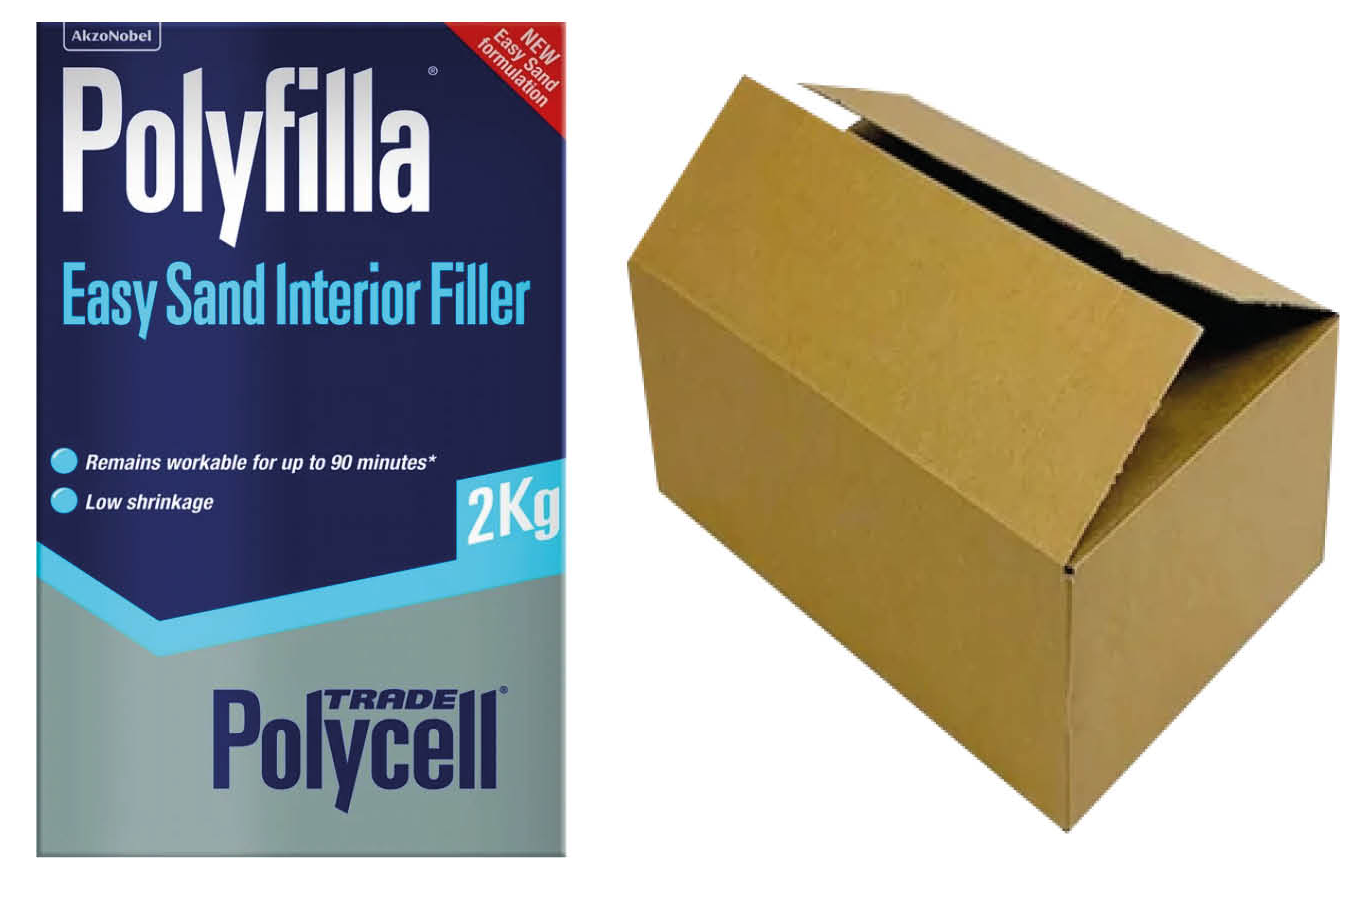 Polycell Trade Polyfilla Easy Sand Interior Filler (Box Quantity)